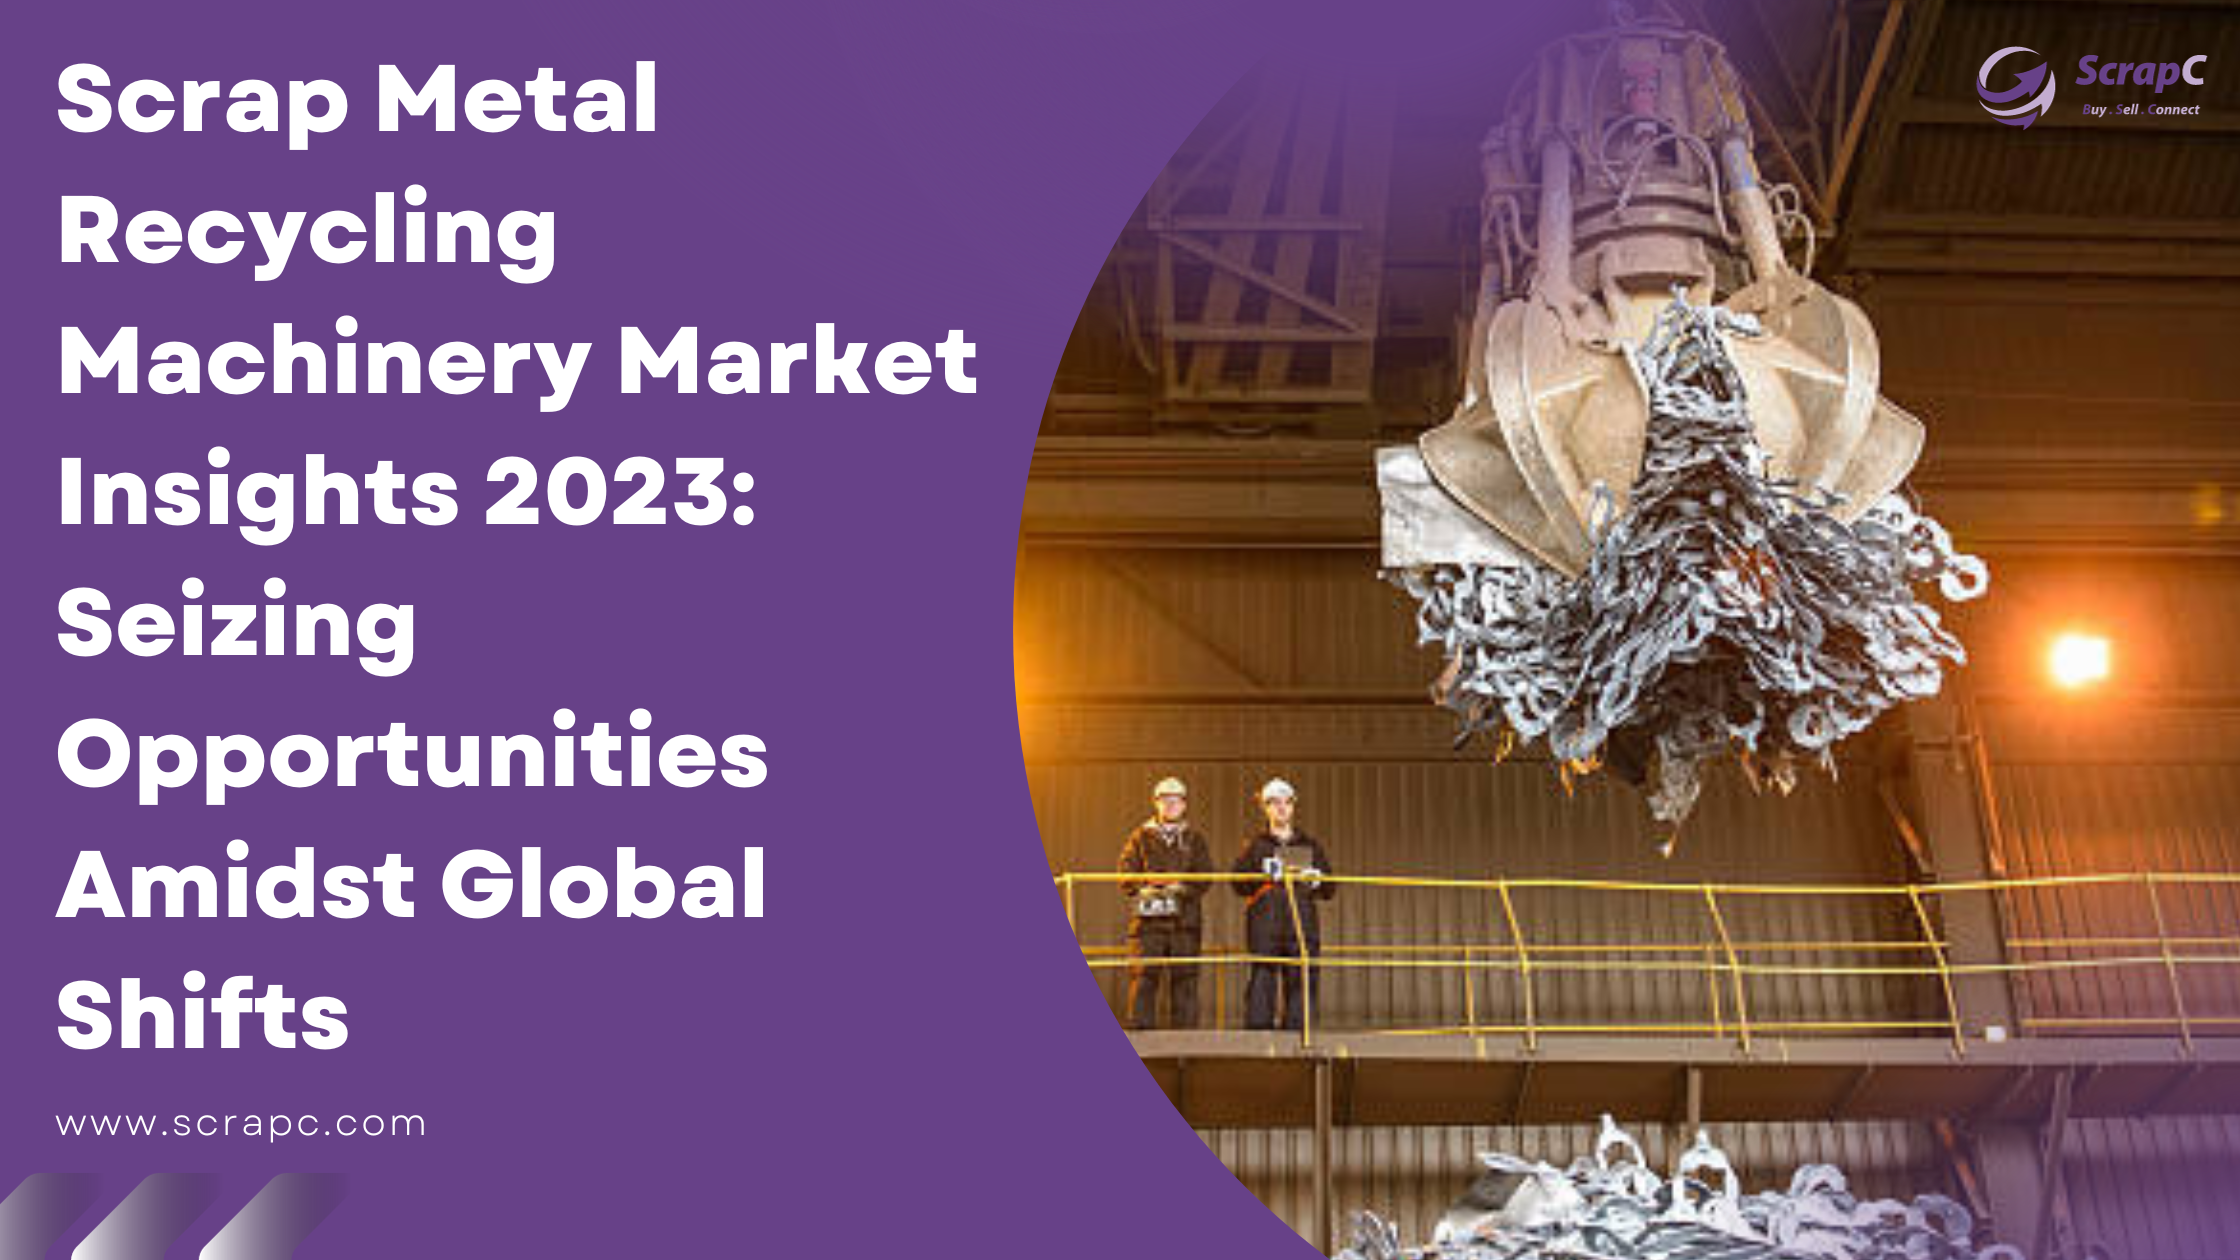 Scrap Metal Recycling Machinery Market Insights 2023: Industrial machinery for recycling metal scrap.